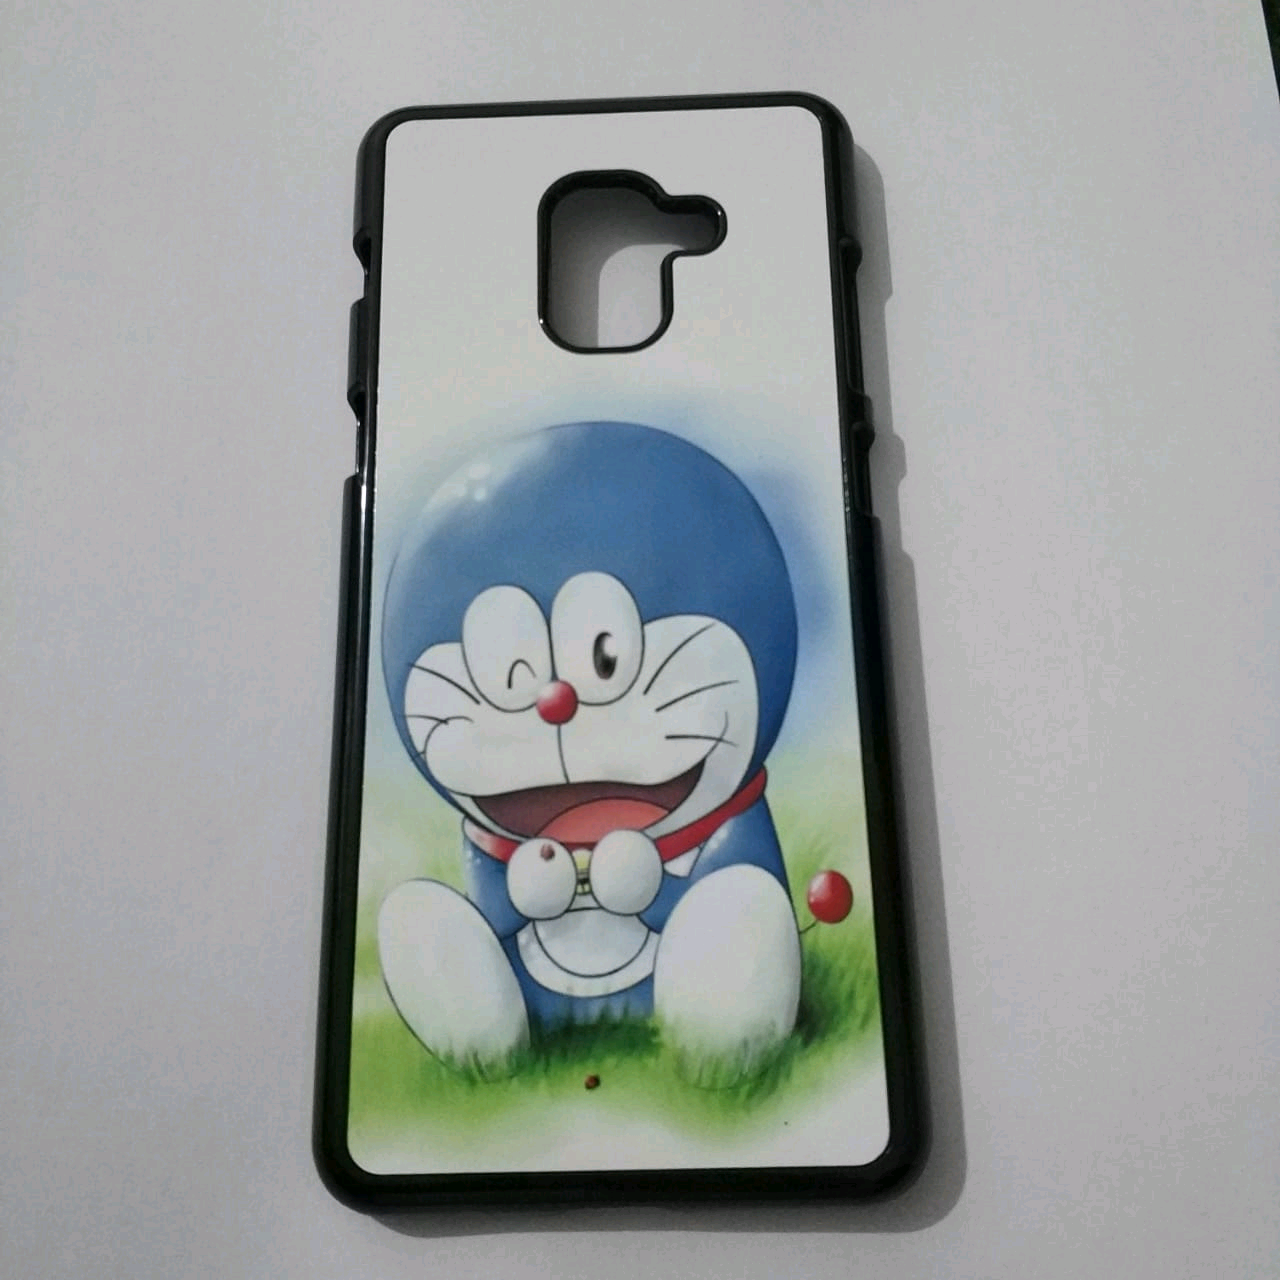 Casing Hp Xiaomi Redmi Note 4 Doraemon - HD Wallpaper 